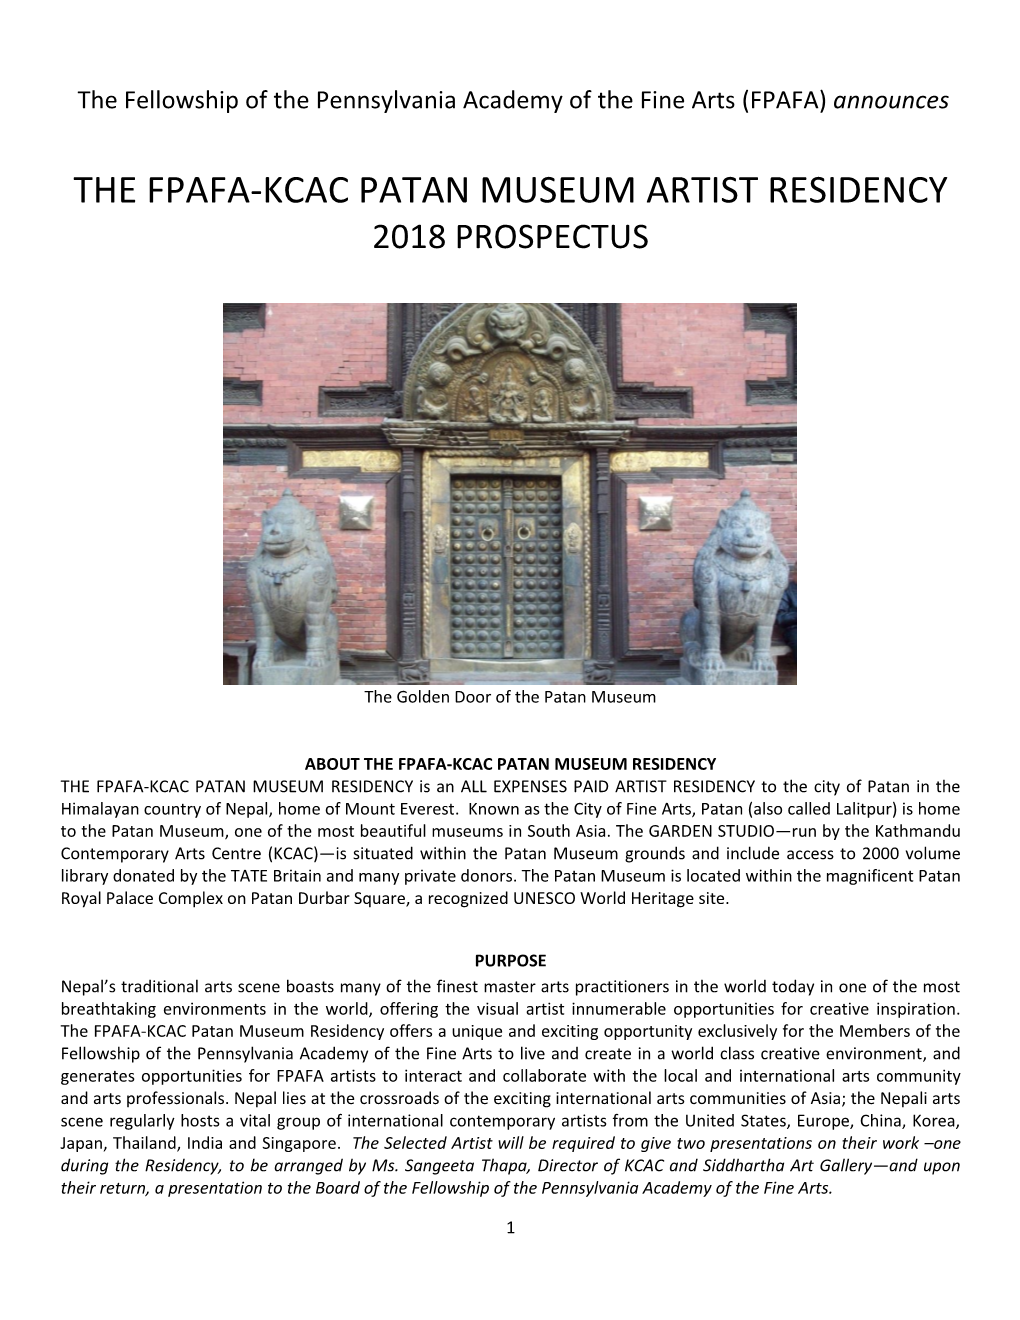 The Fpafa-Kcac Patan Museum Artist Residency 2018 Prospectus